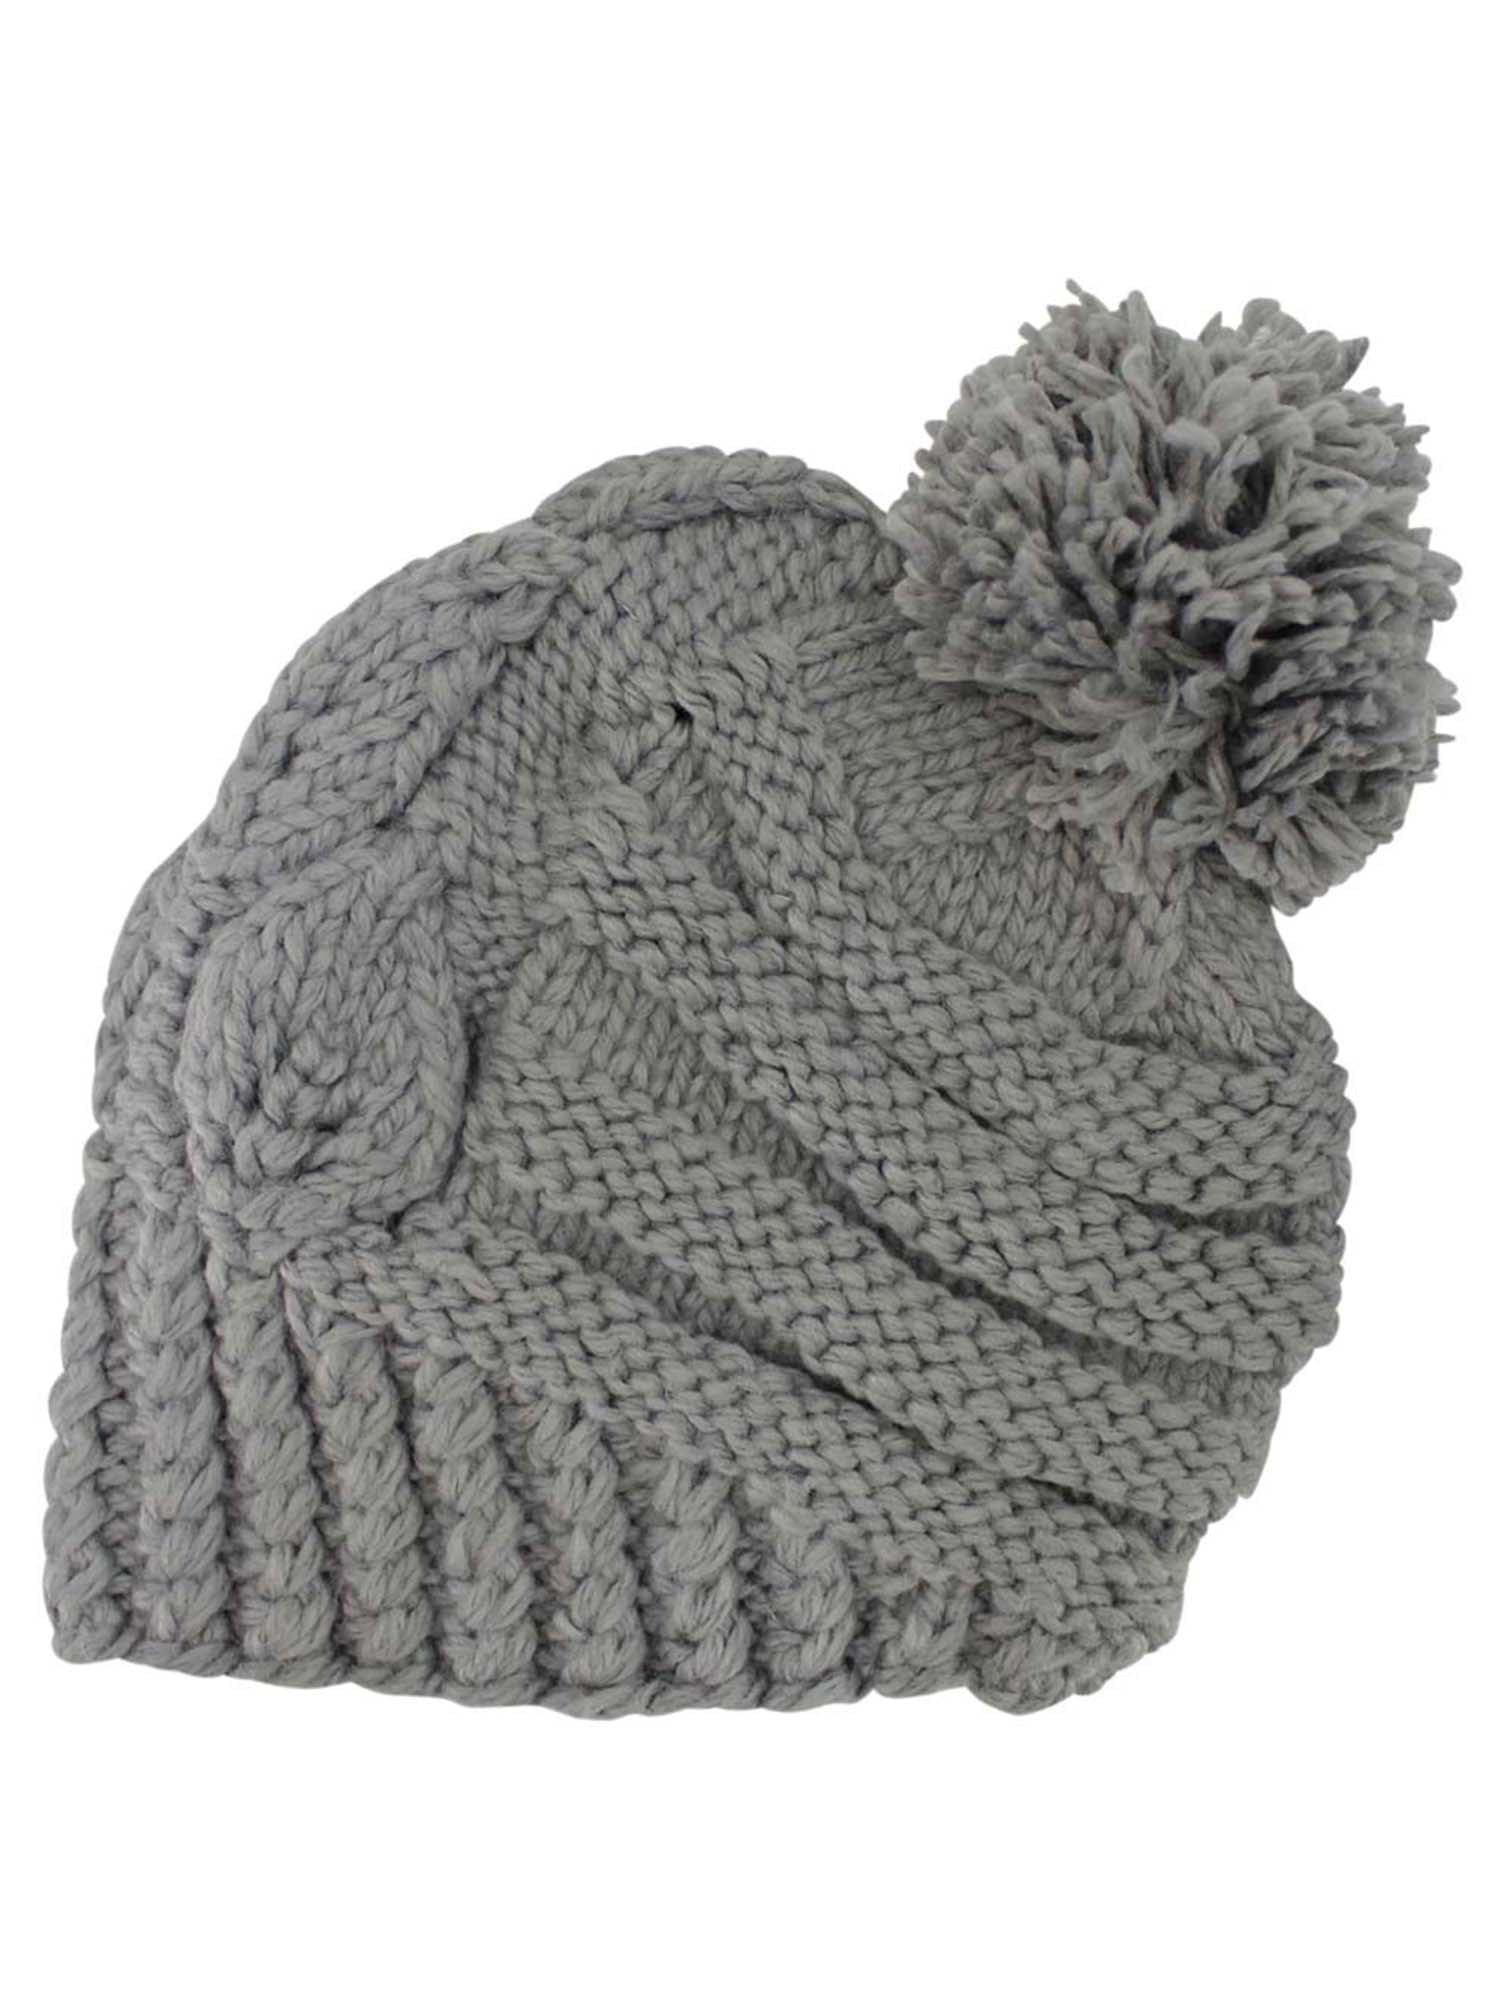 Grey Slouchy Winter Pom Pom Beanie Knit With Hat Cable